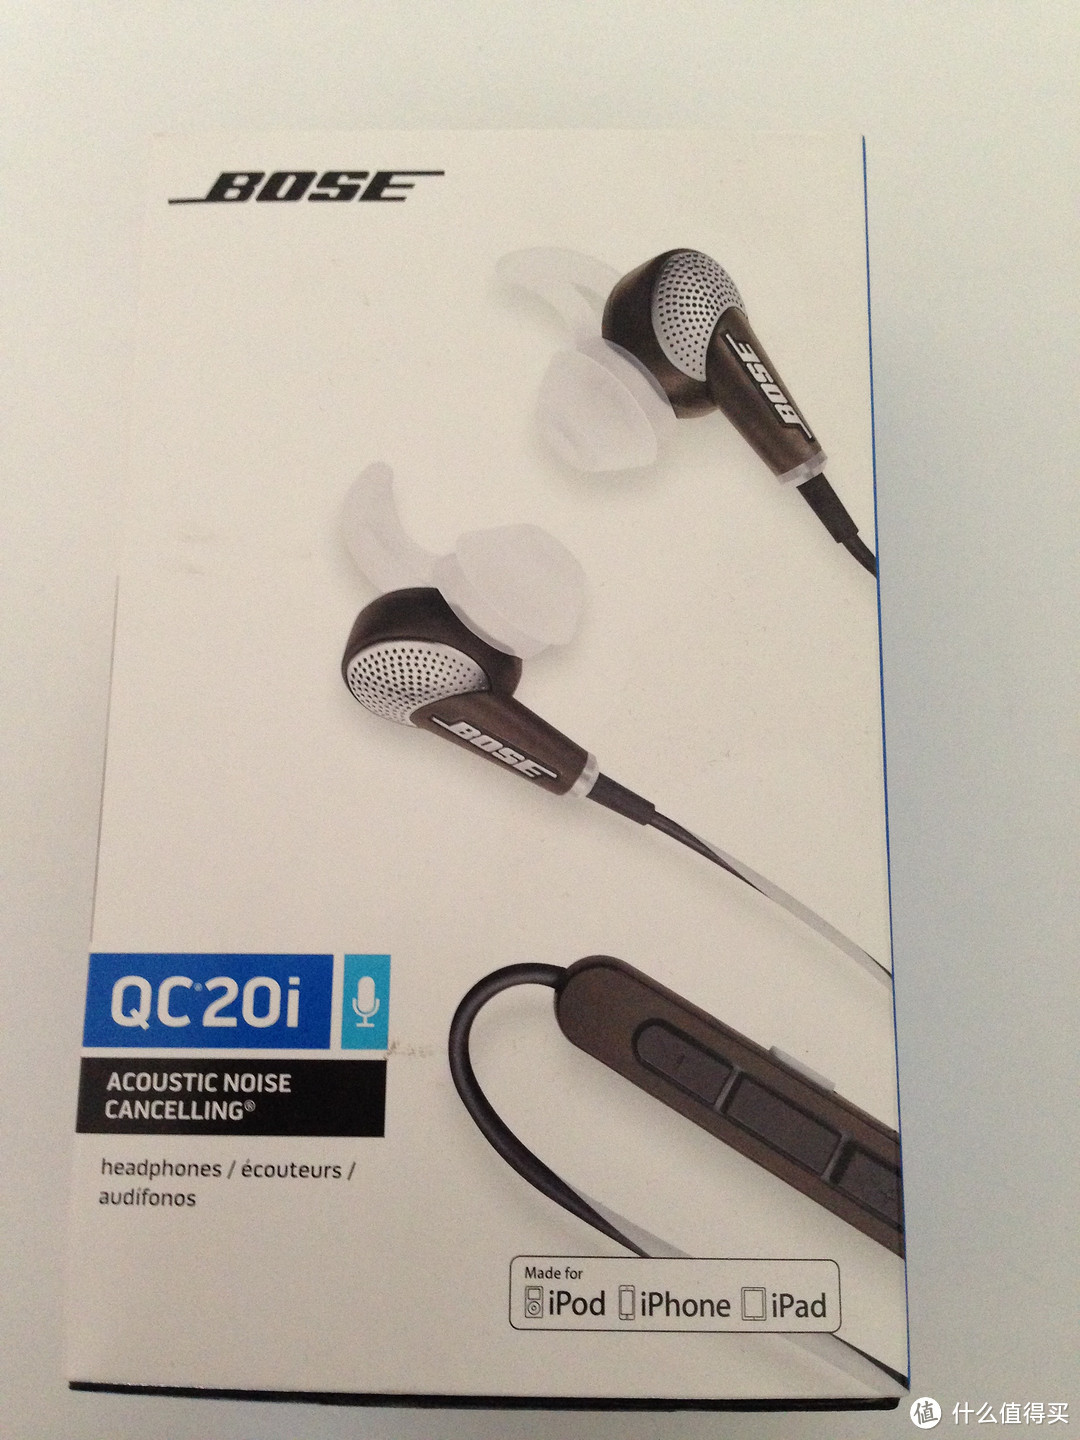 BOSE 博士 QuietComfort 20i QC20i 主动降噪 入耳式耳机 苹果线控版 — 让世界安静